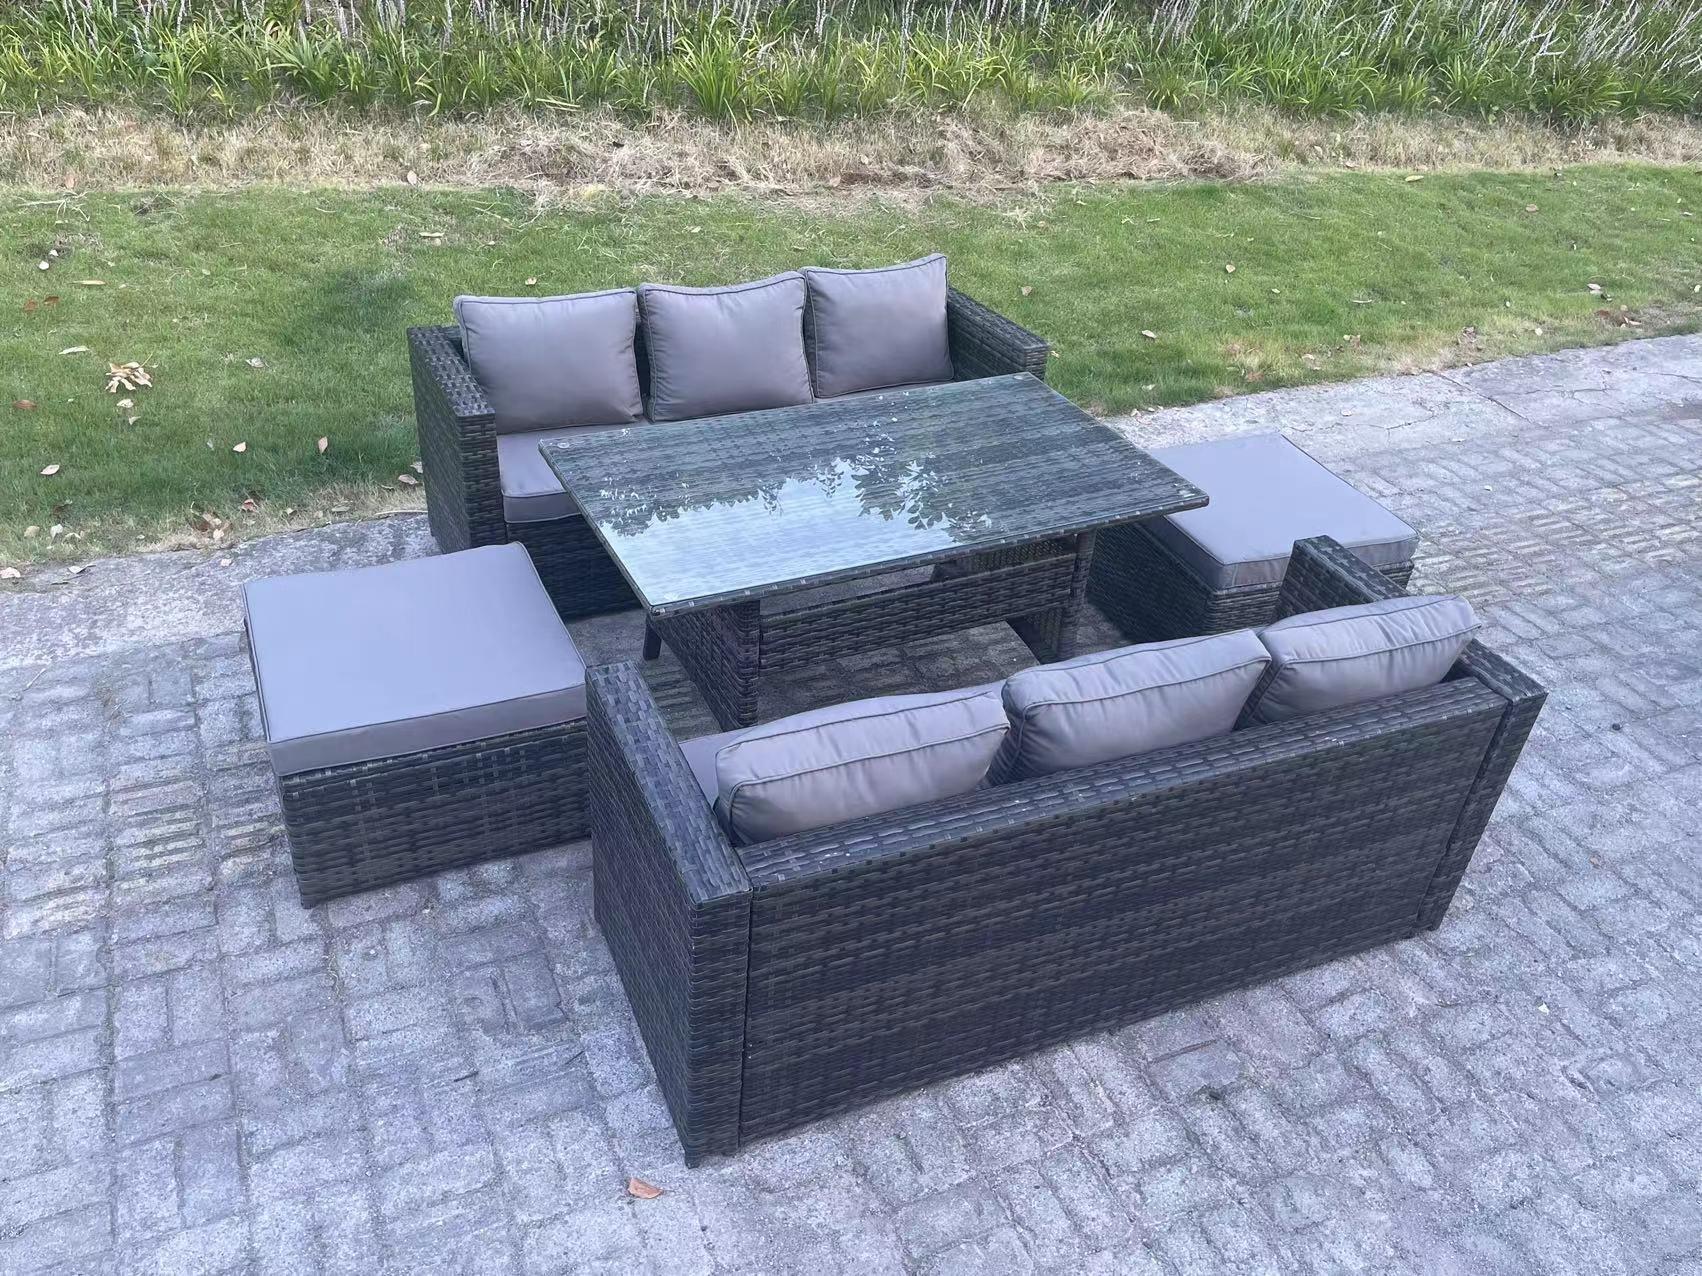 8 Seater Outdoor Lounge Sofa Garden Furniture Set Patio Rattan Rectangular Dining Table